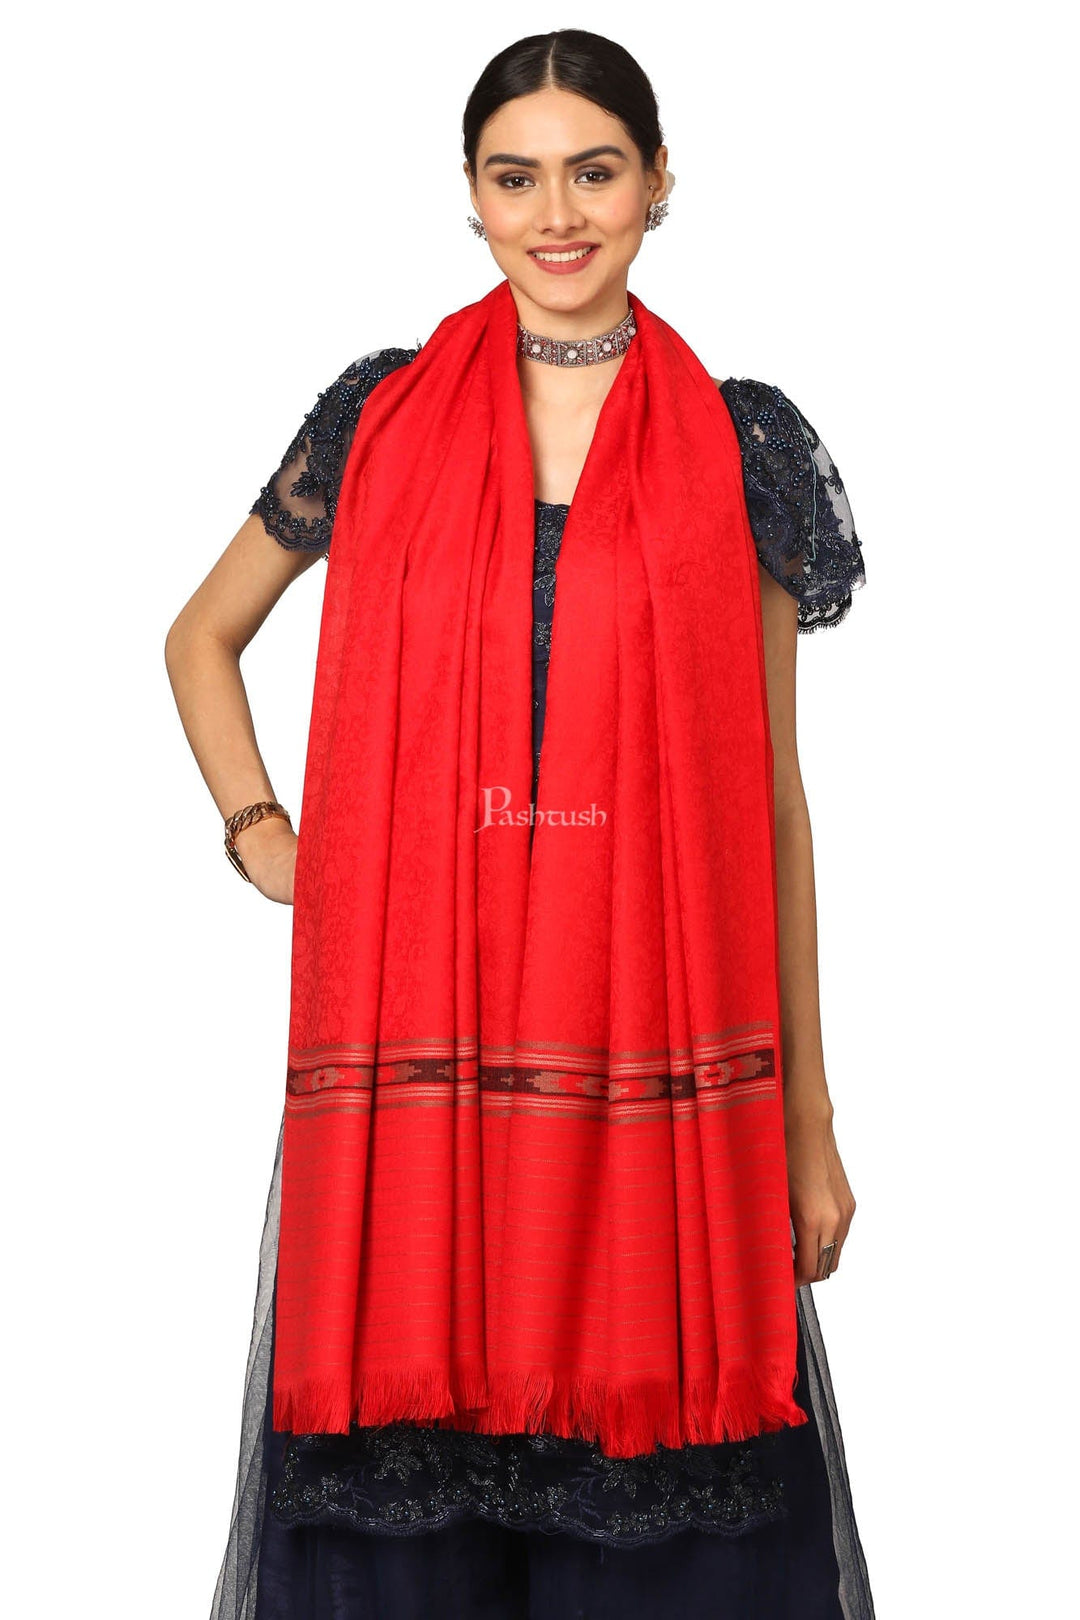 Pashtush India Womens Shawls Pashtush Women'S Fine Wool Shawl, Soft And Warm, Aztec Design, Jacquard Weave - Red